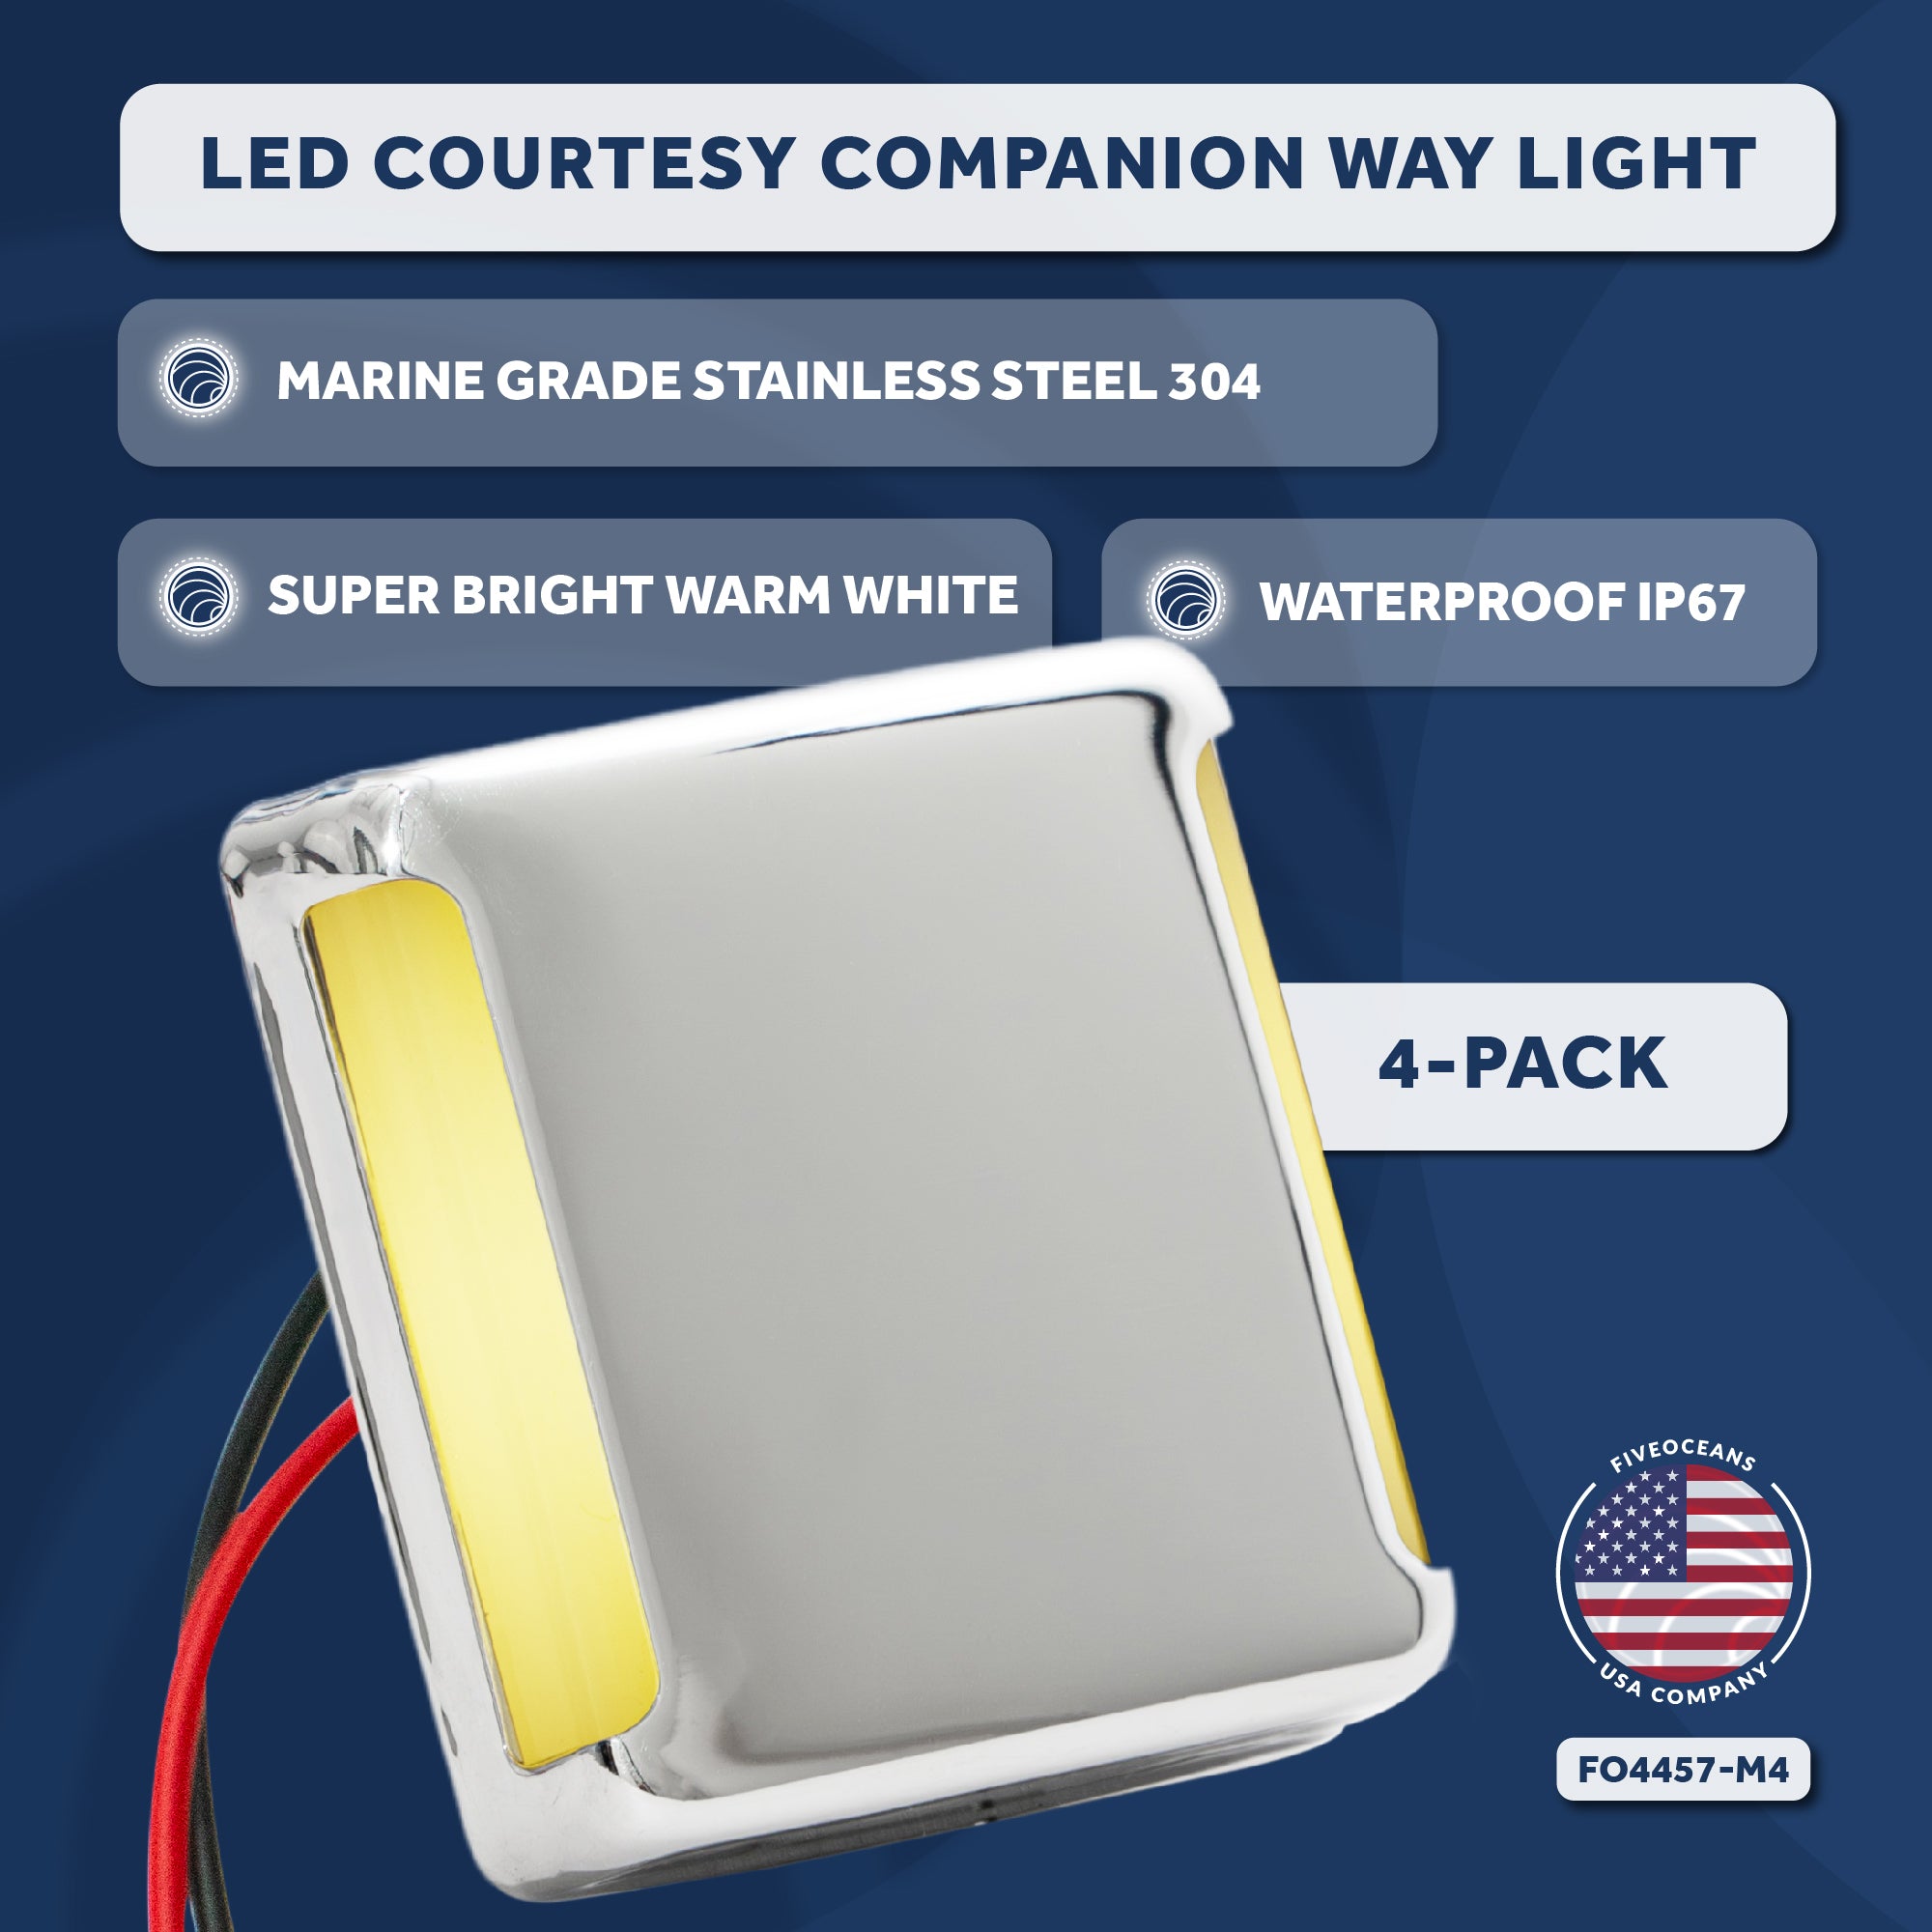 LED Courtesy Companion Way Light, Square, Warm White, 4-Pack - FO4457-M4